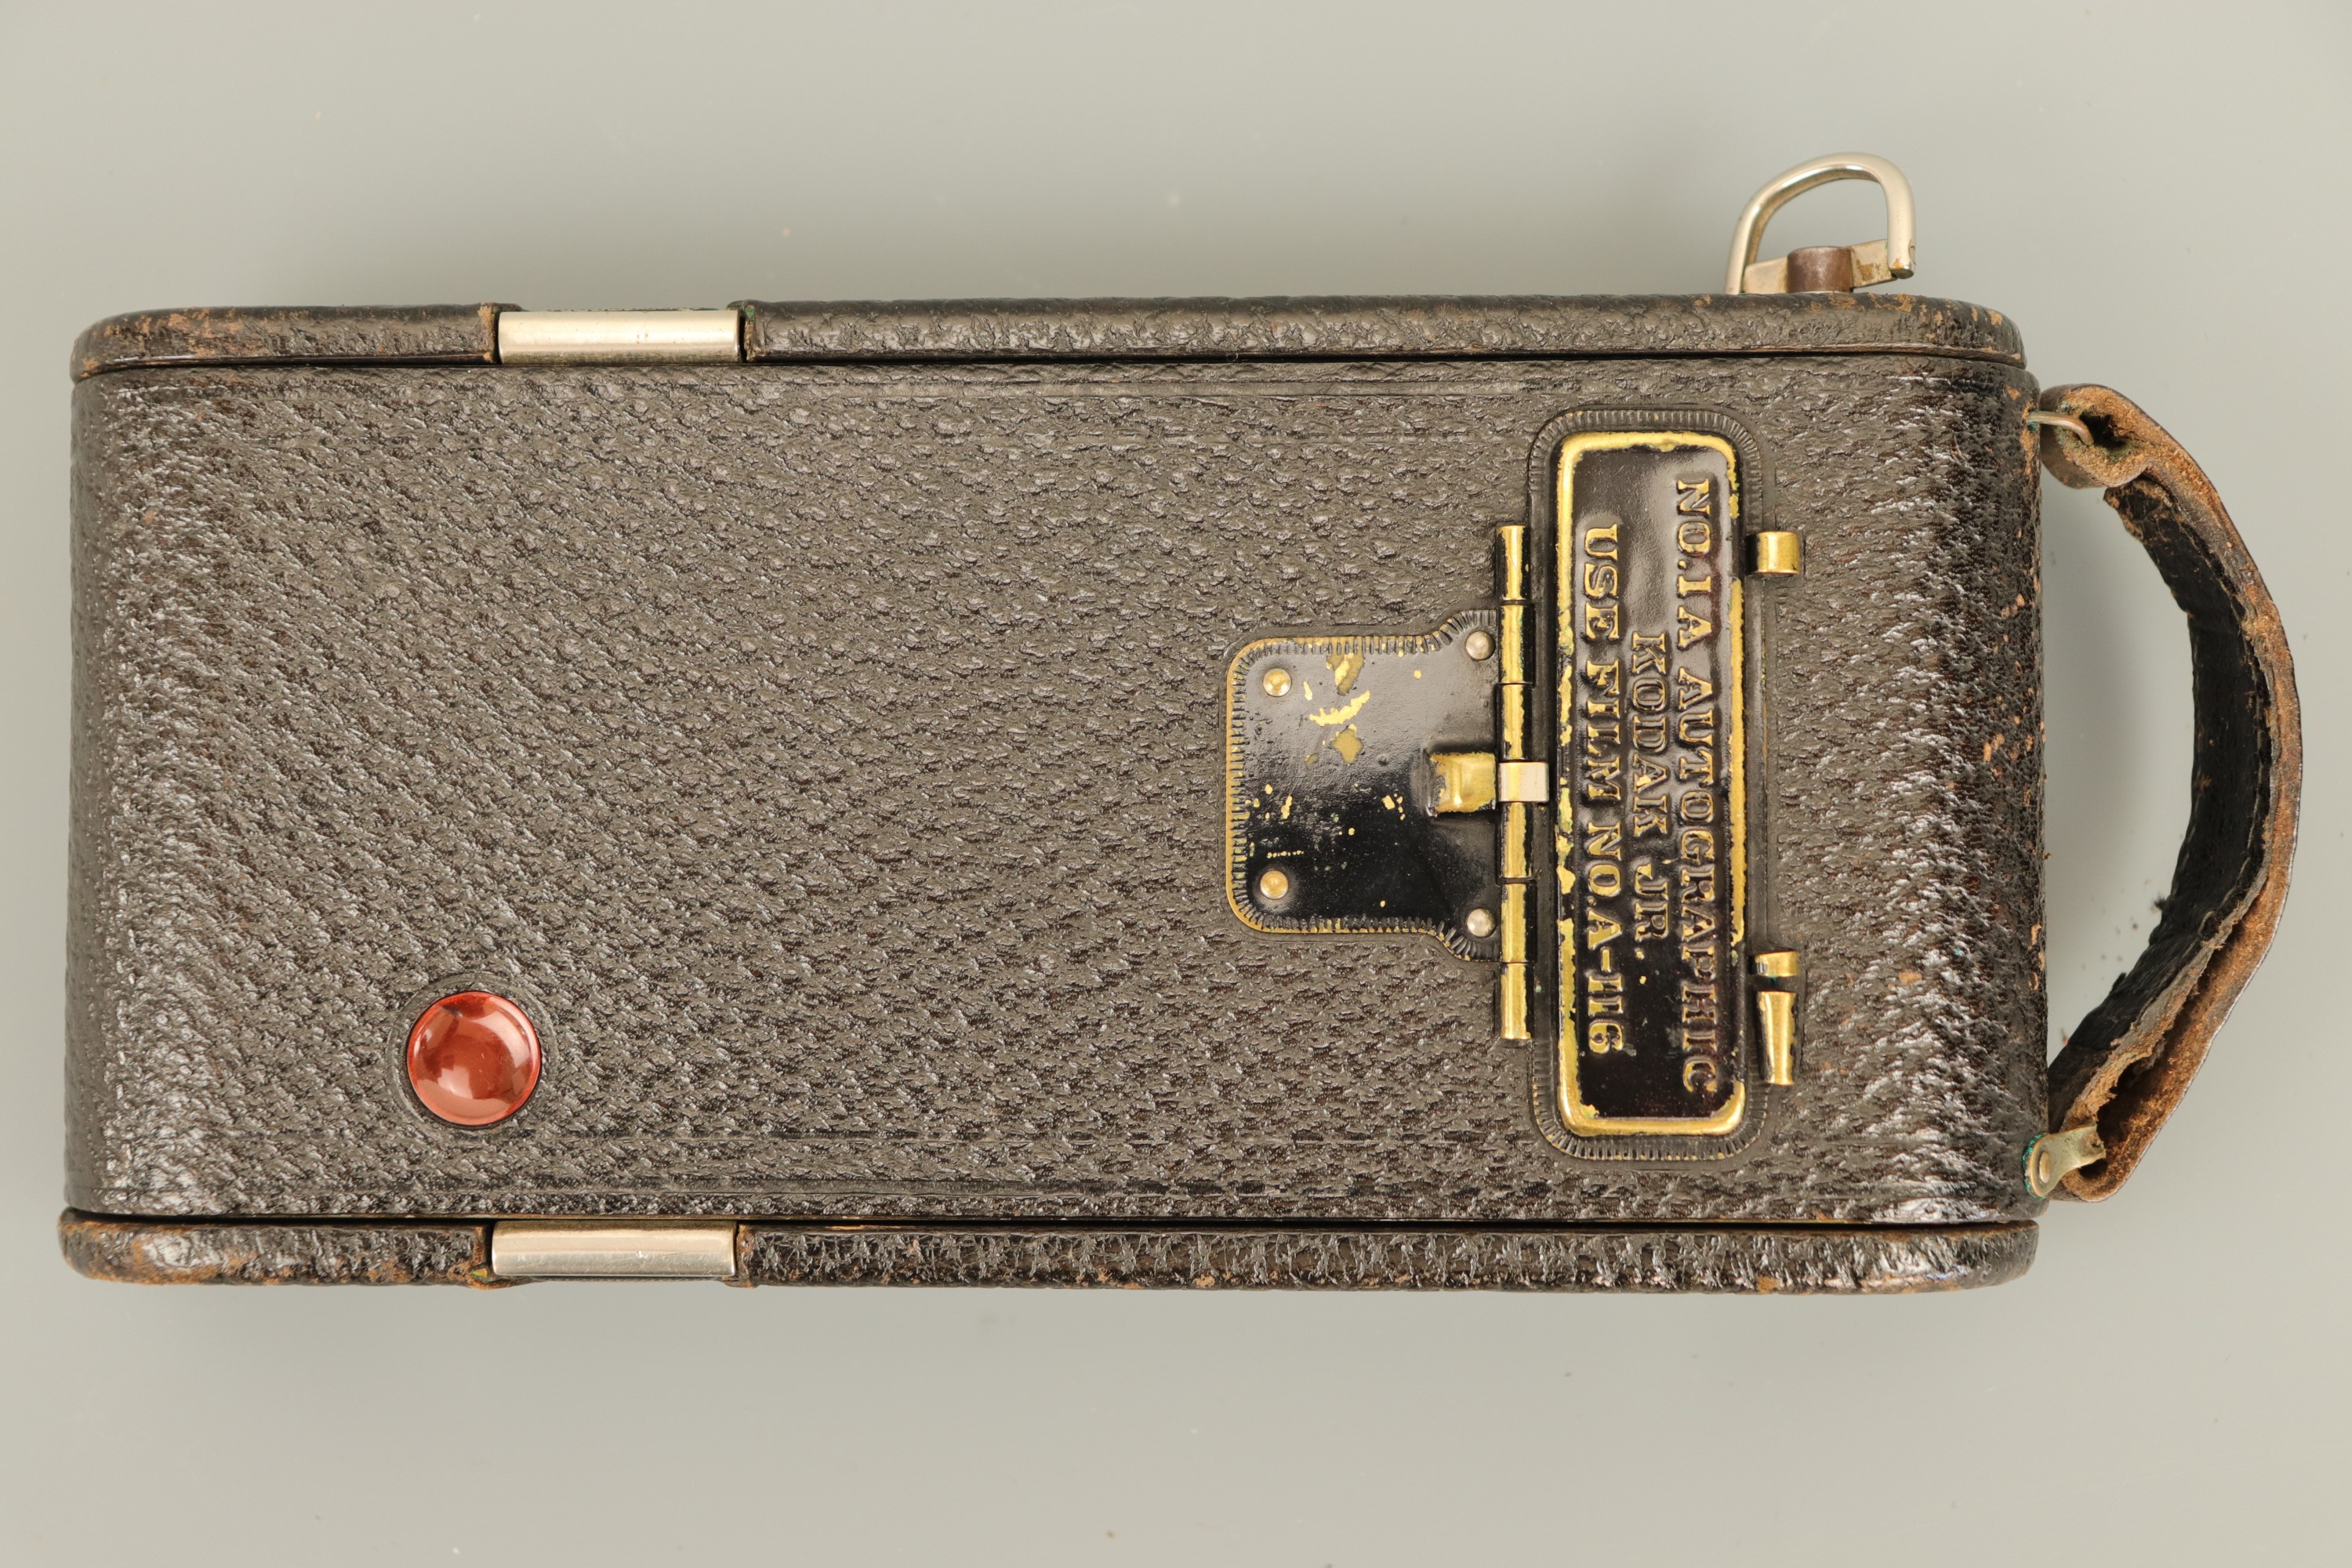 A Kodak No.1 Model A Autographic Special camera, in leather case, circa 1915 - Image 2 of 3